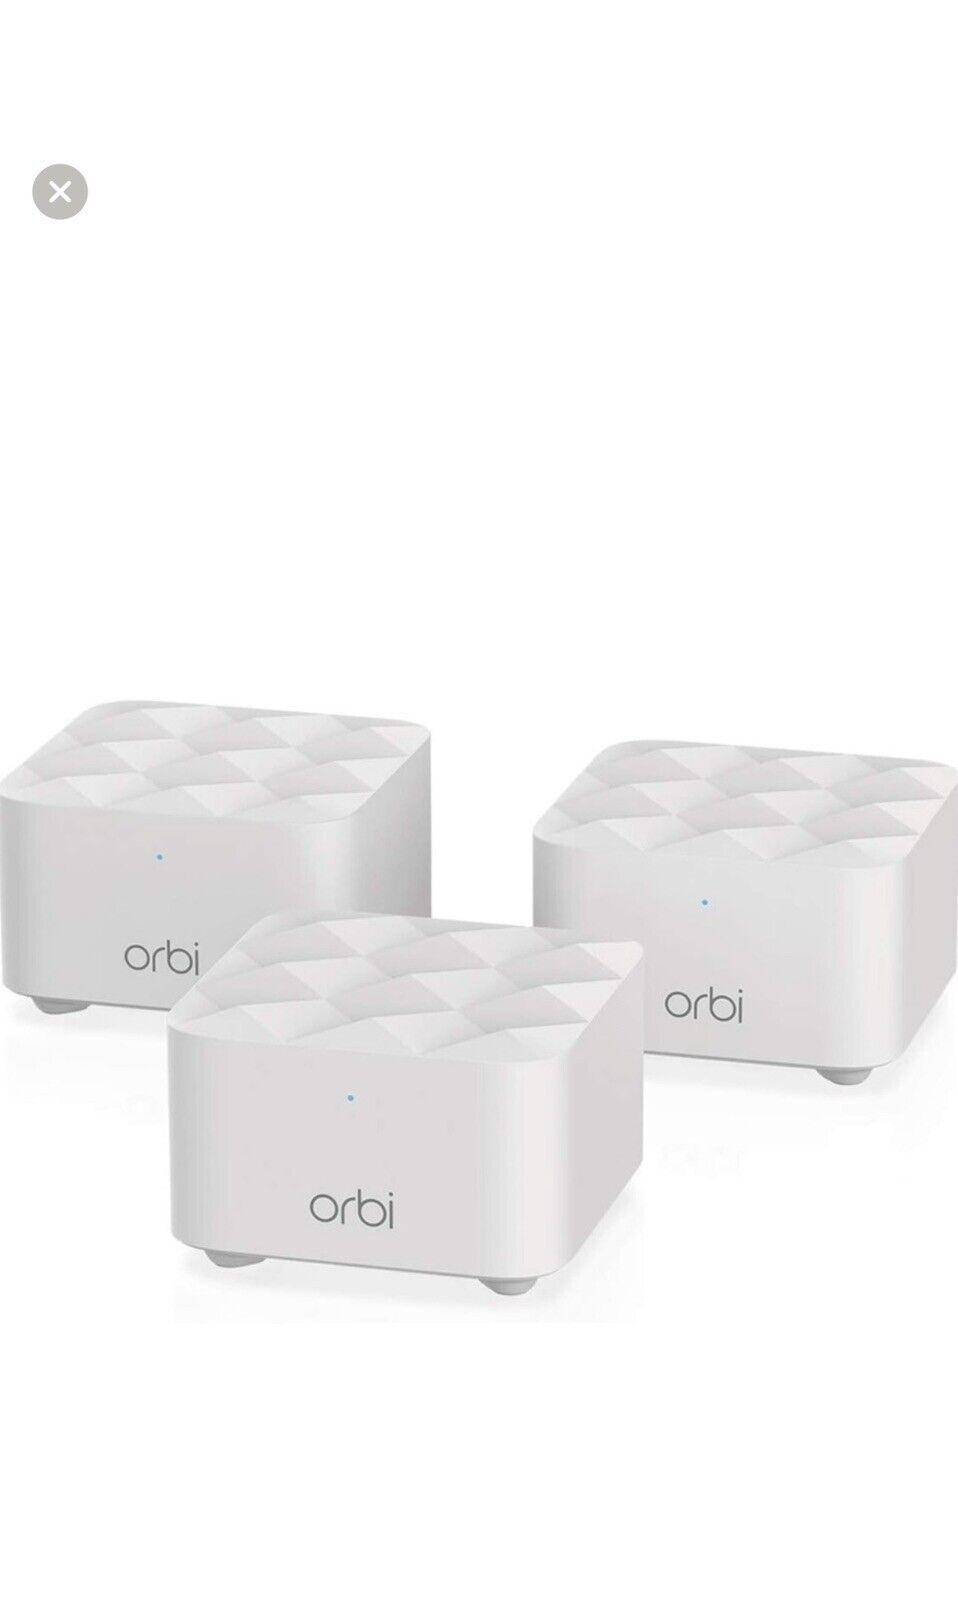 Netgear (RBK13) Orbi Whole Home Mesh WiFi System